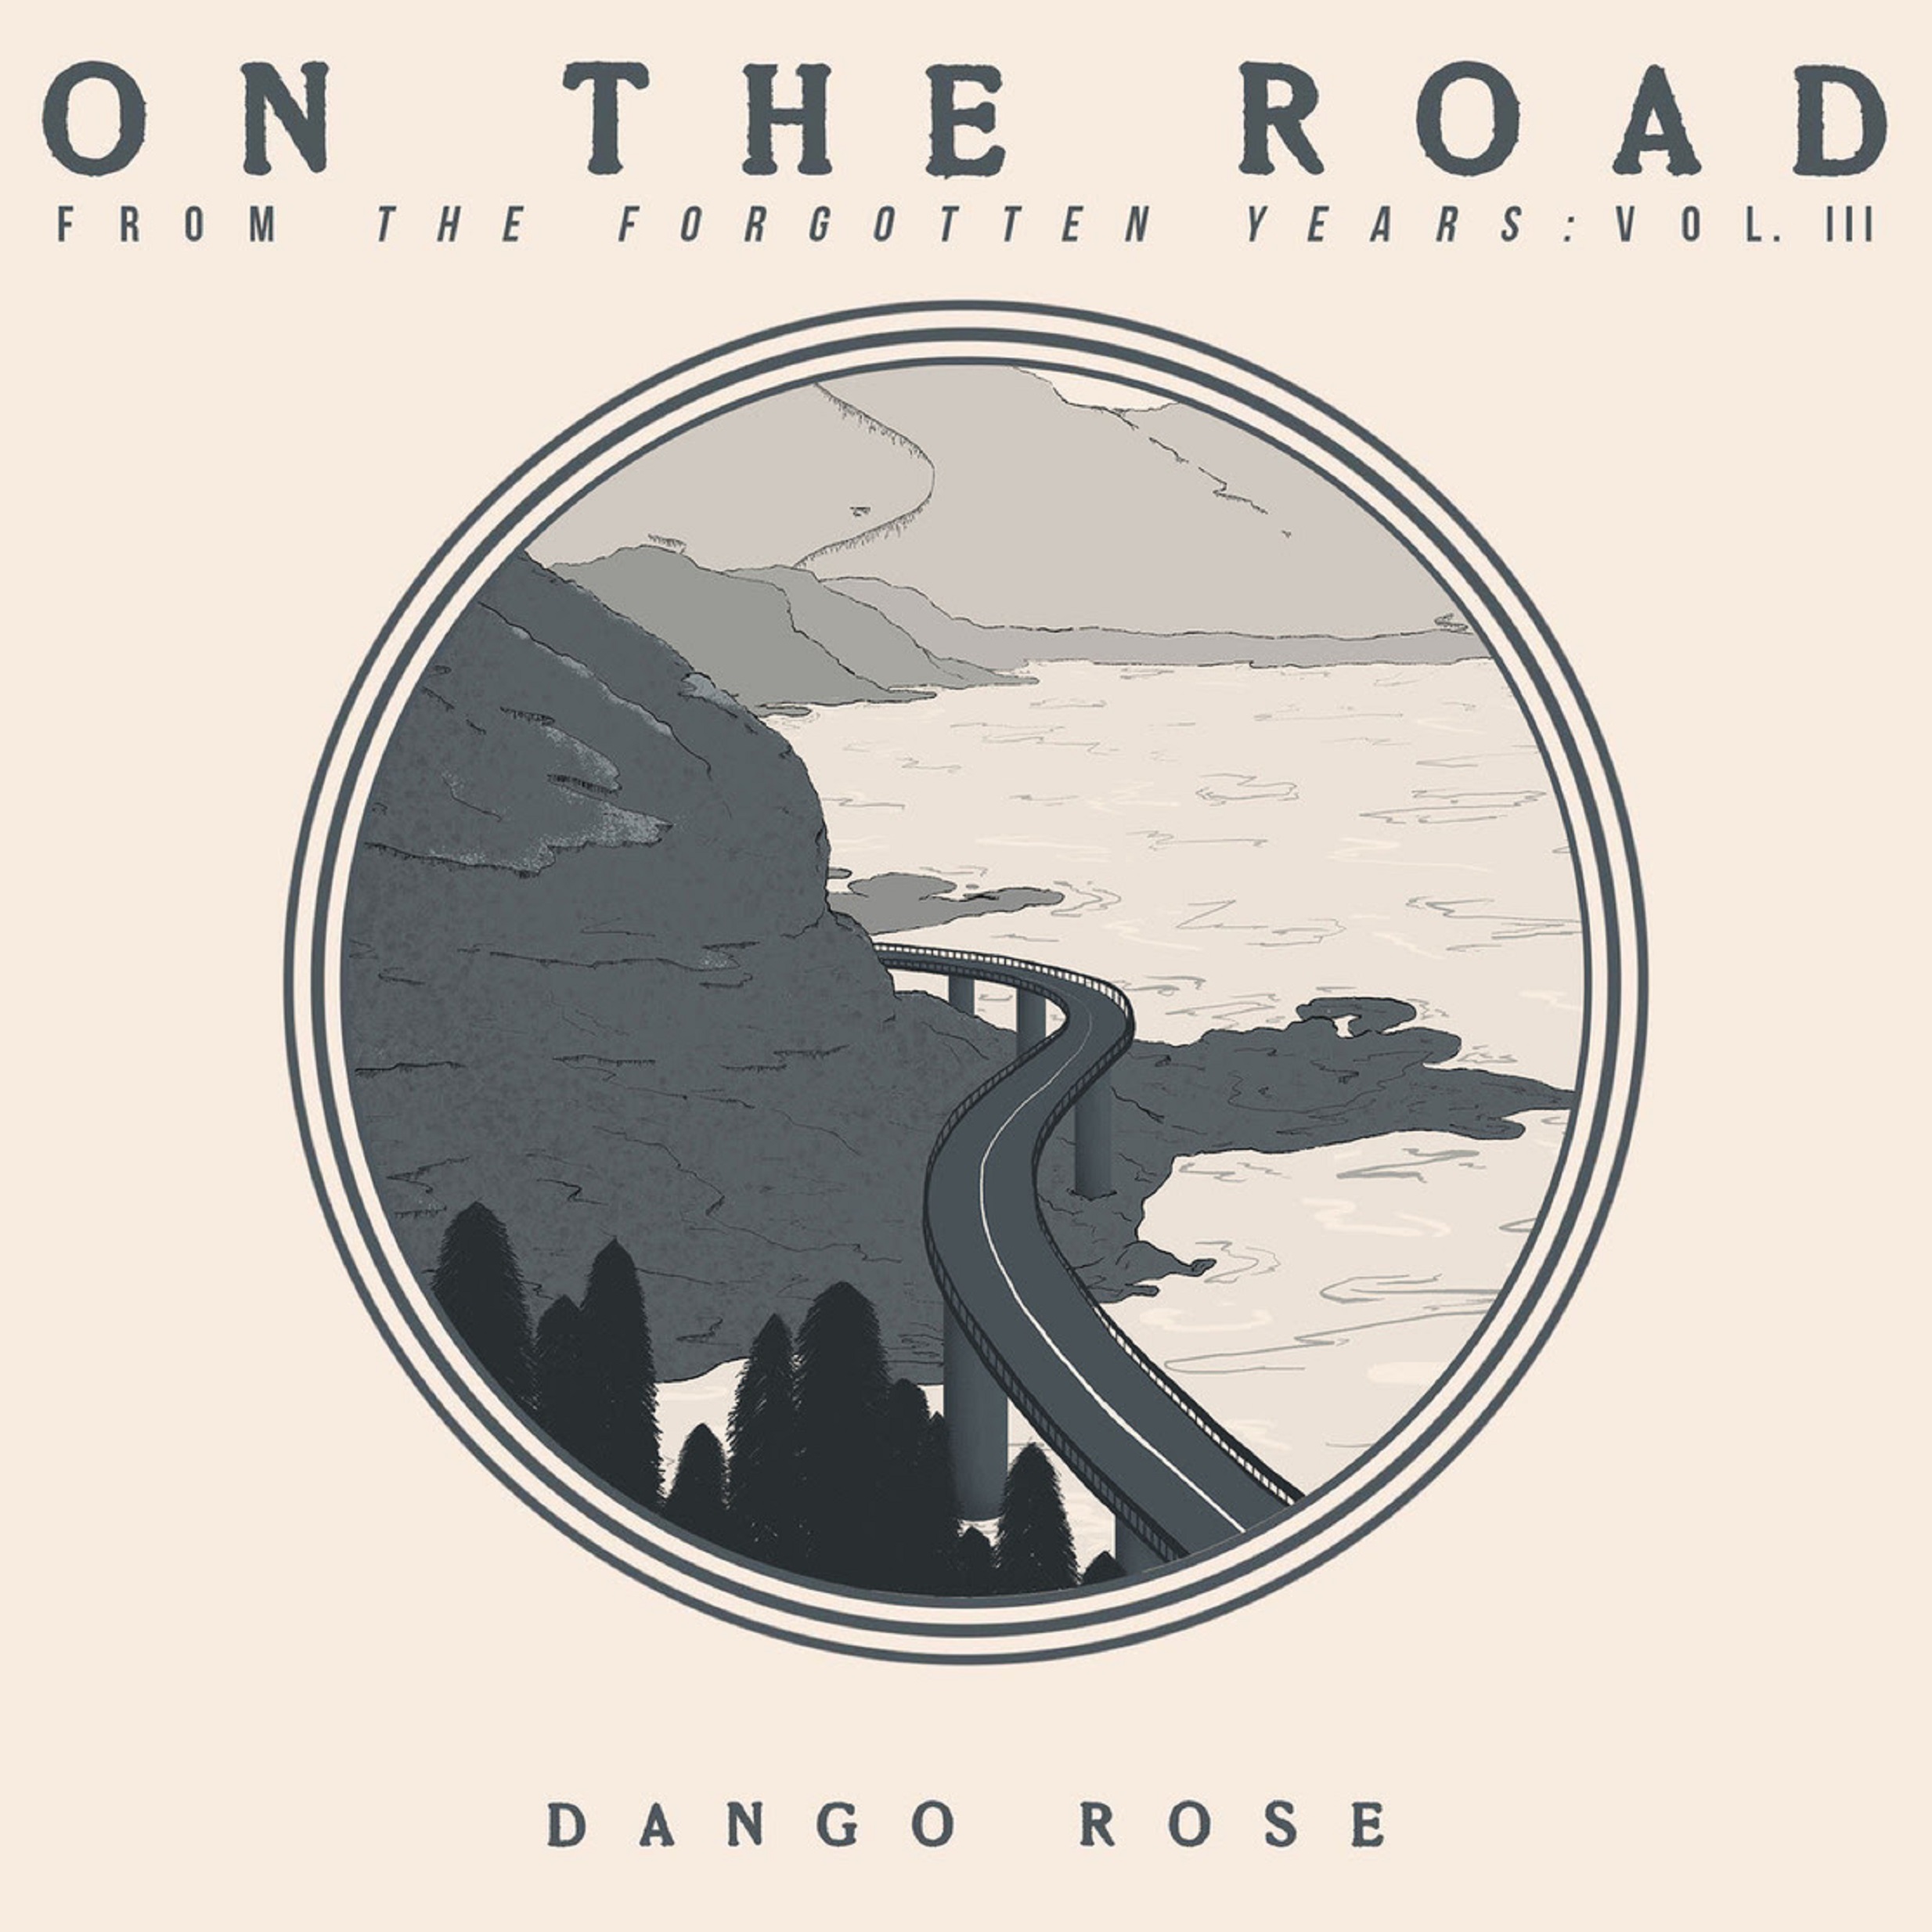 Dango Rose Releases Single "On The Road" Feb. 25